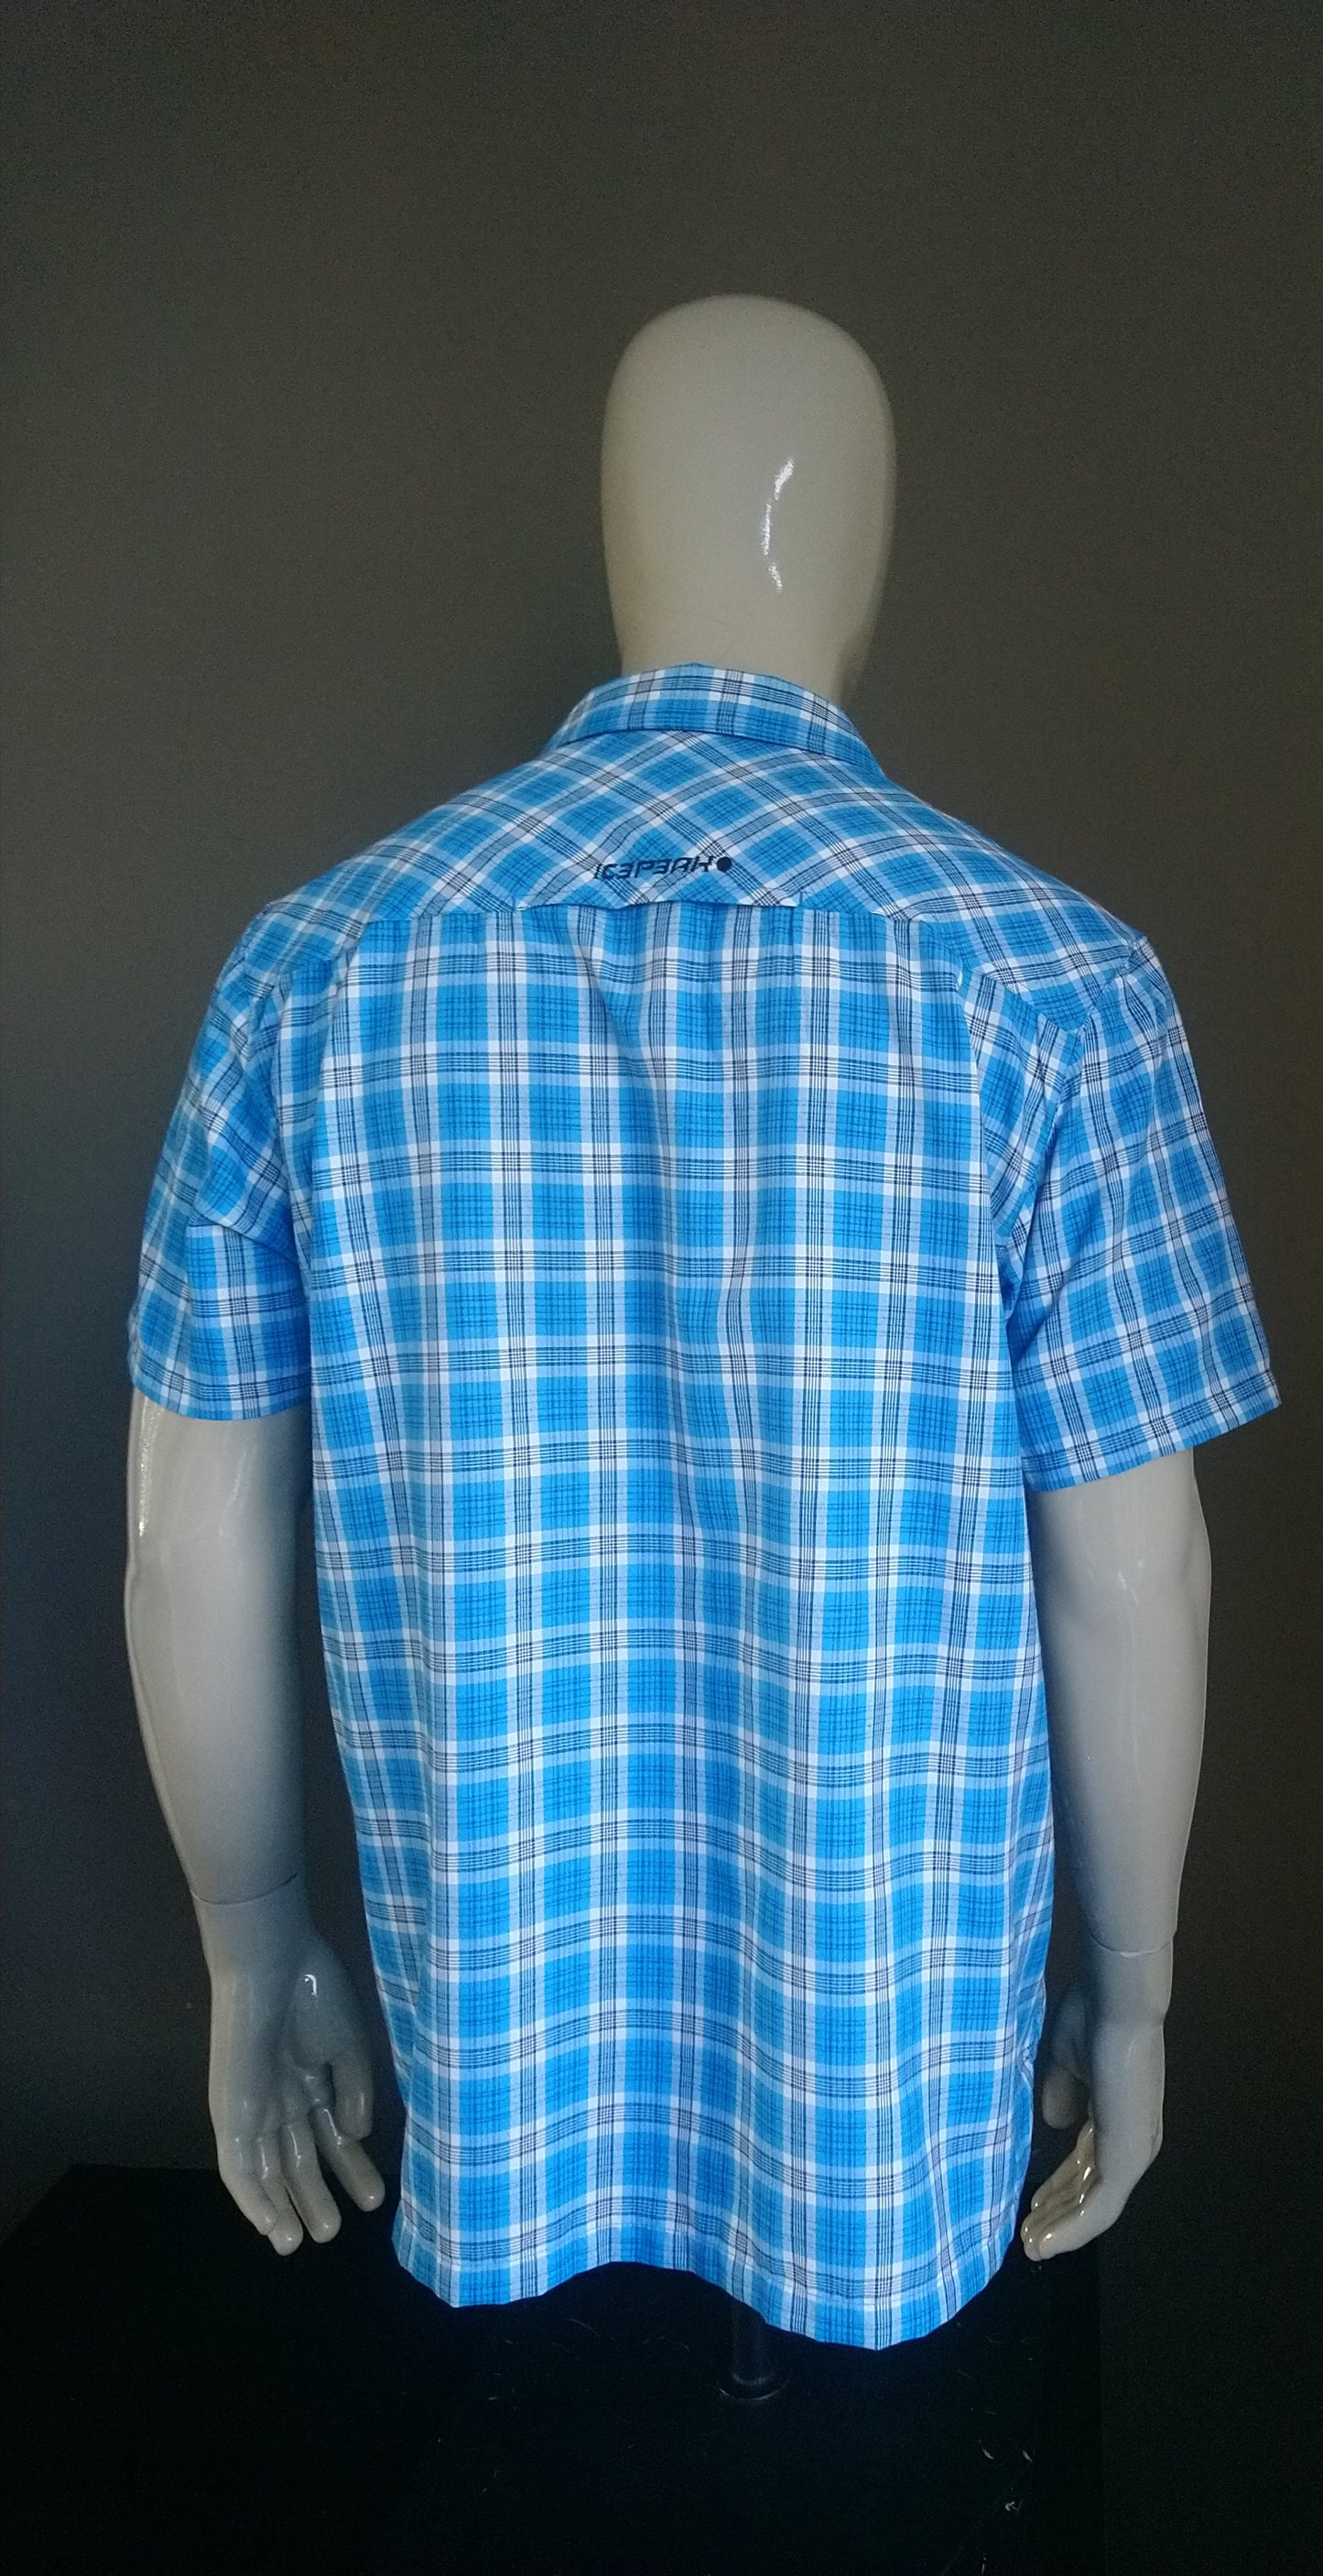 Icepeak shirt short sleeve. Blue white green checked. Size XL.